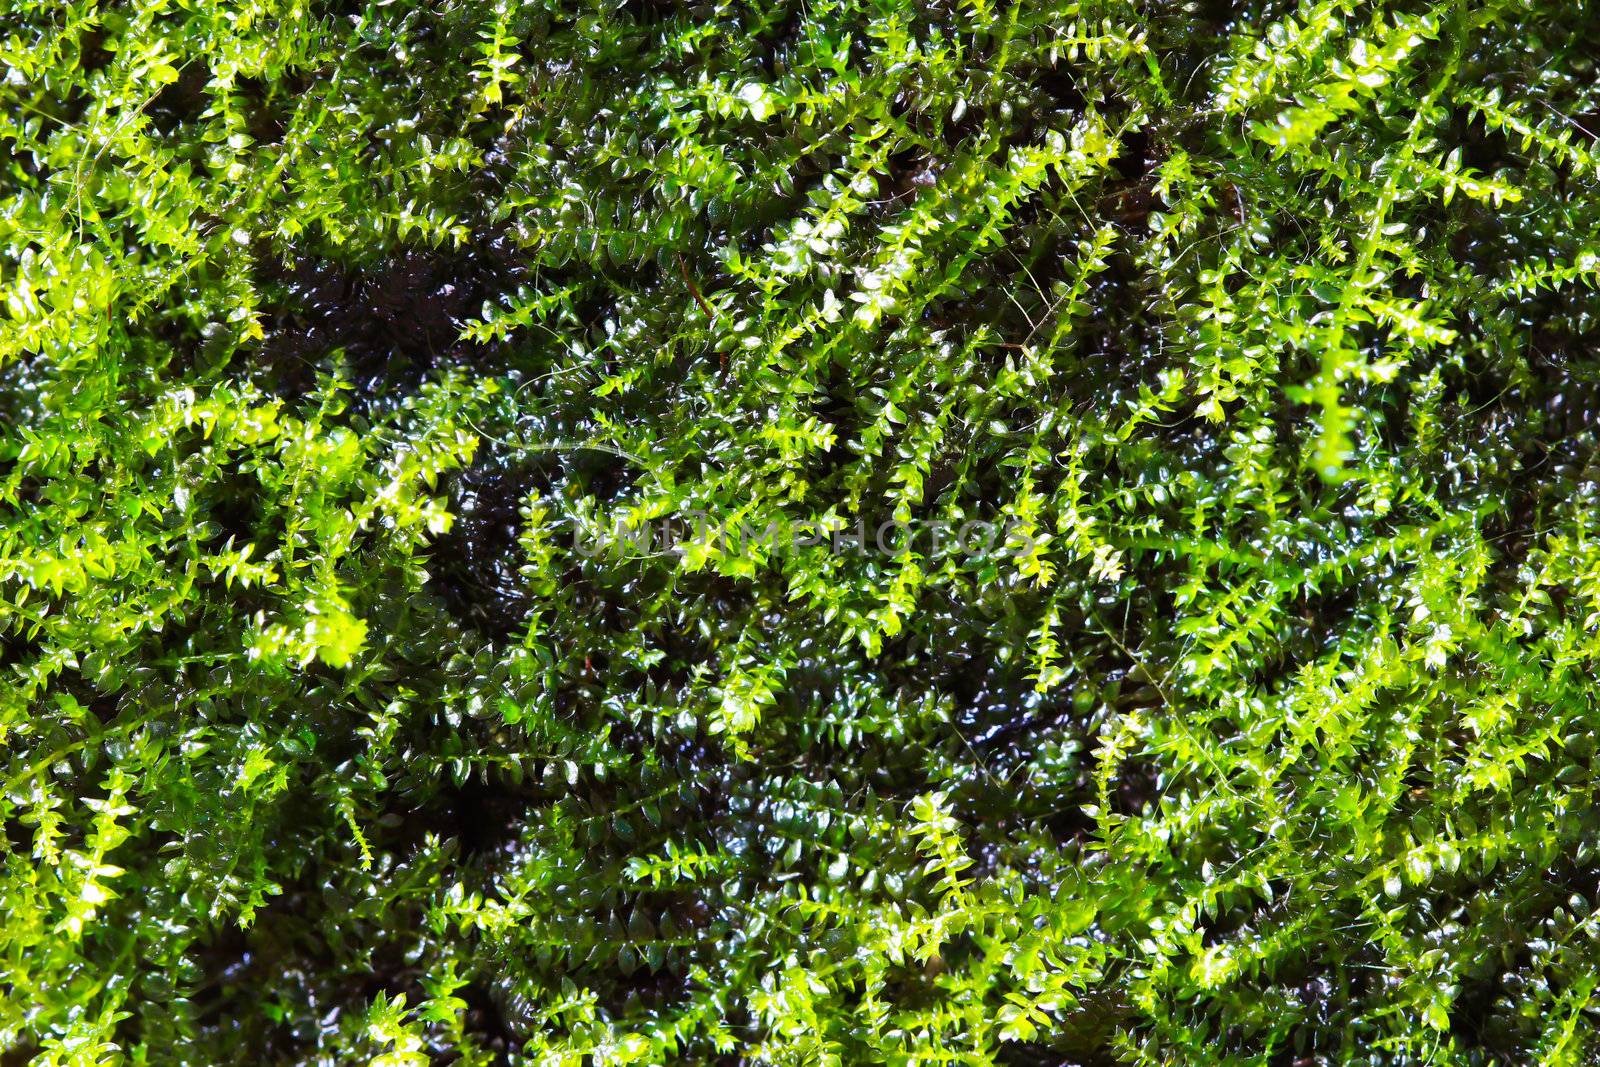 green algae texture : closes - up